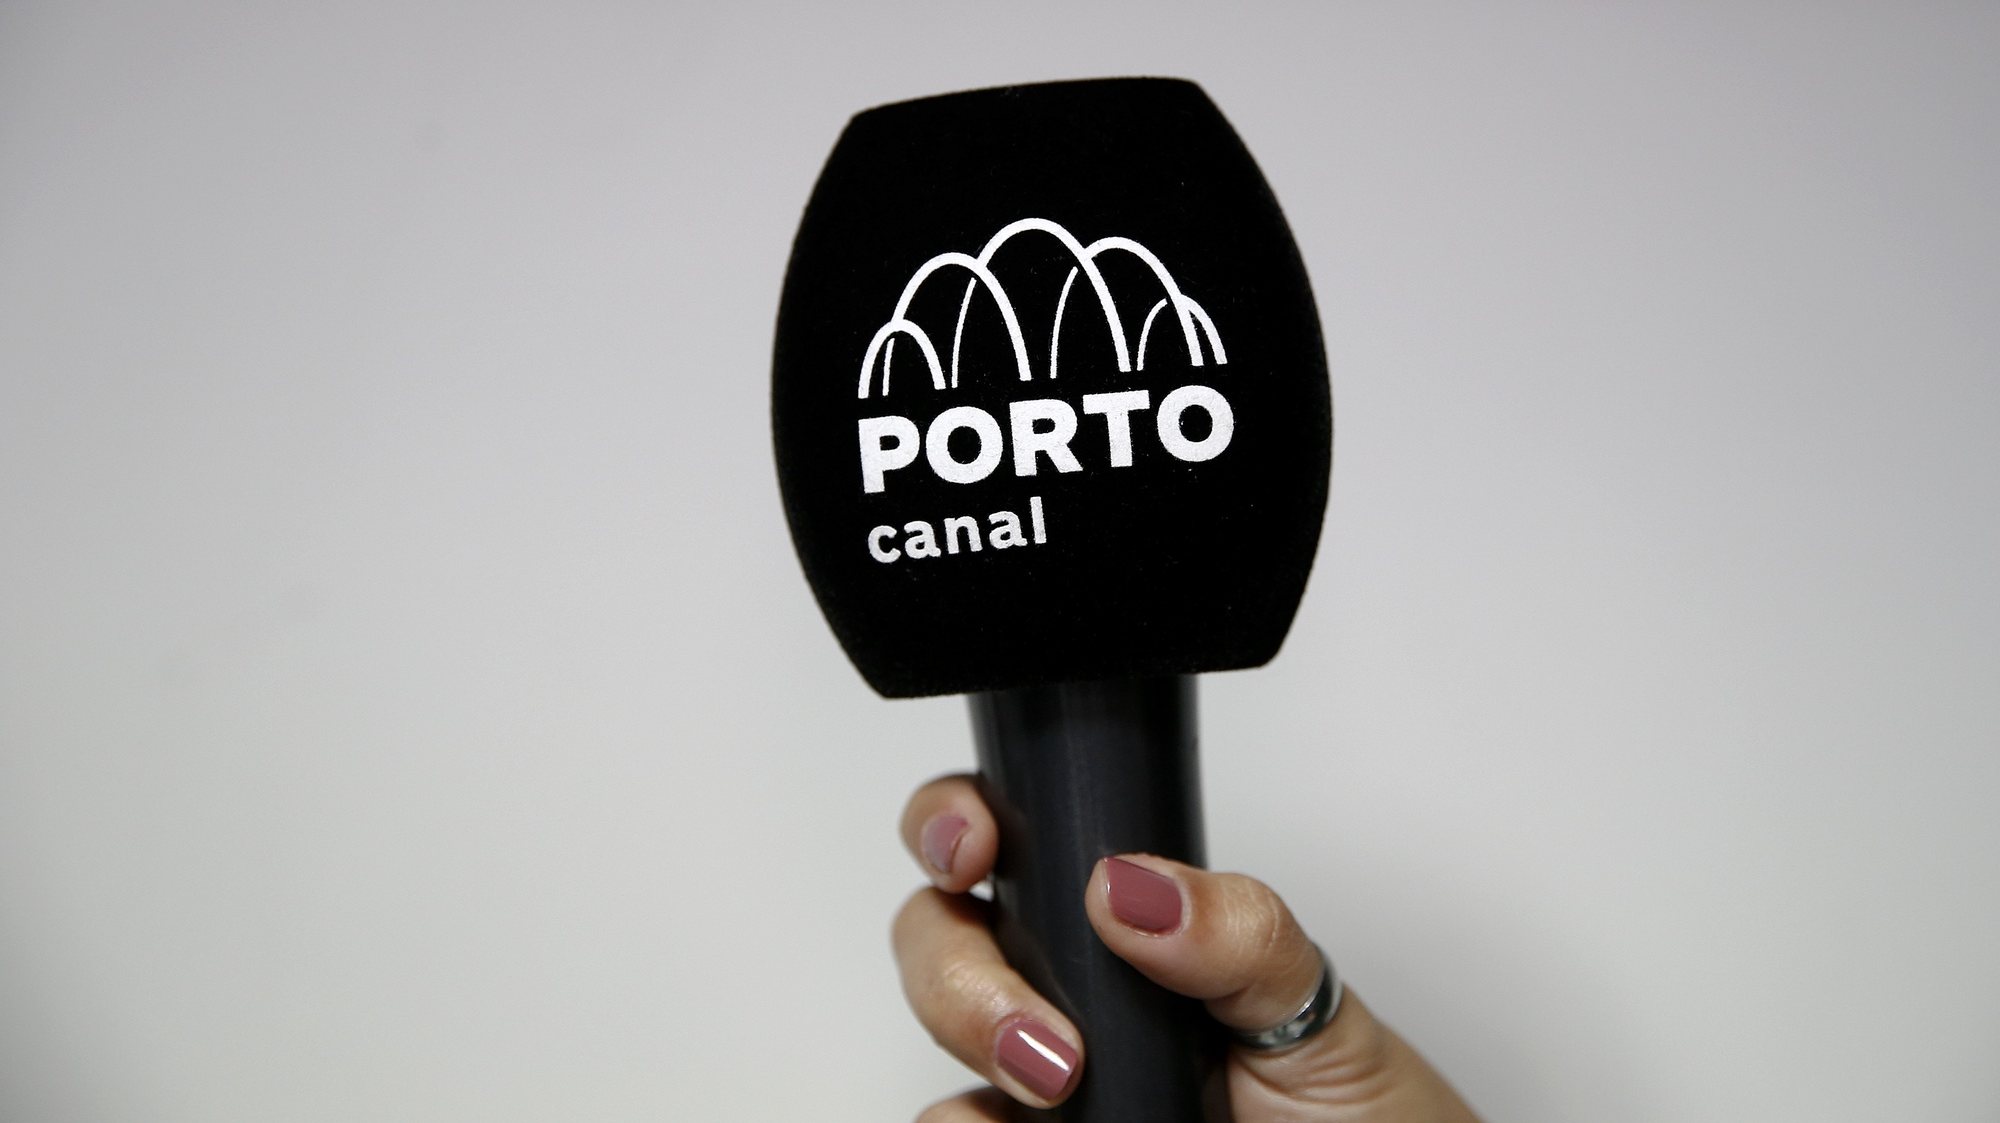 Logotipo do Porto Canal, Lisboa, 10 de fevereiro de 2016, ANTÓNIO COTRIM/LUSA